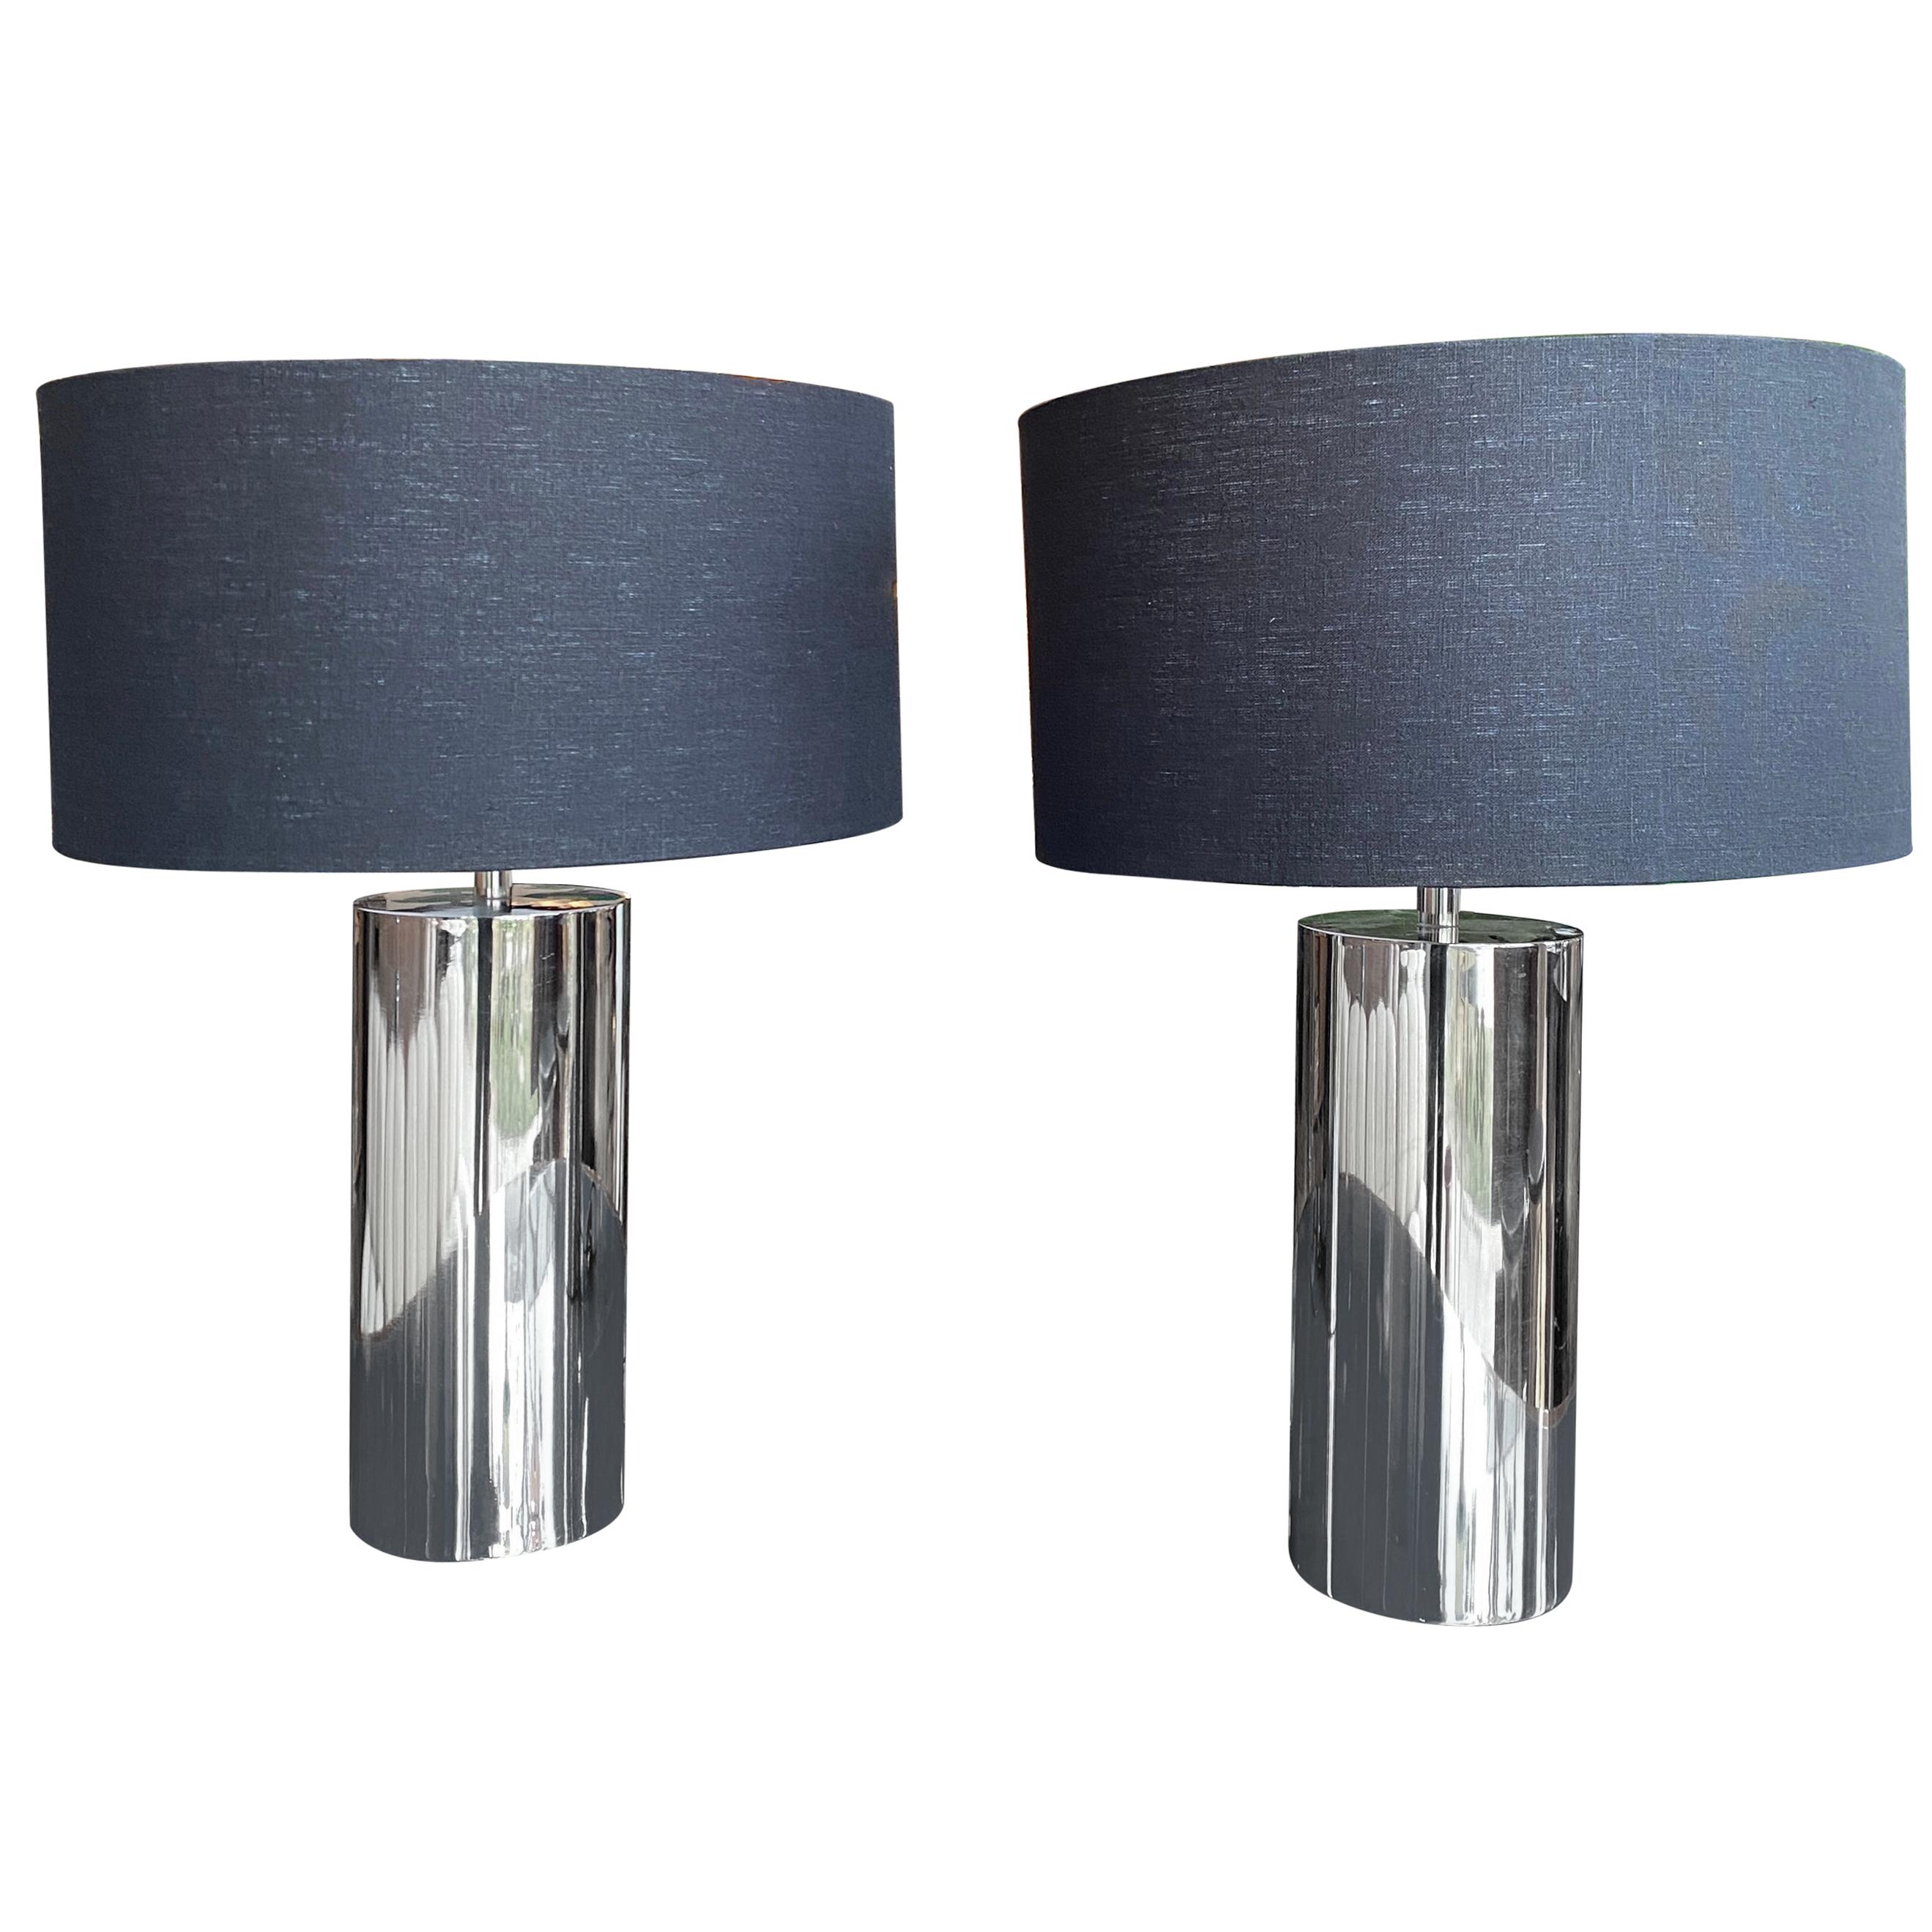 Reggiani, Pair of Italian Table Lamps in Chrome